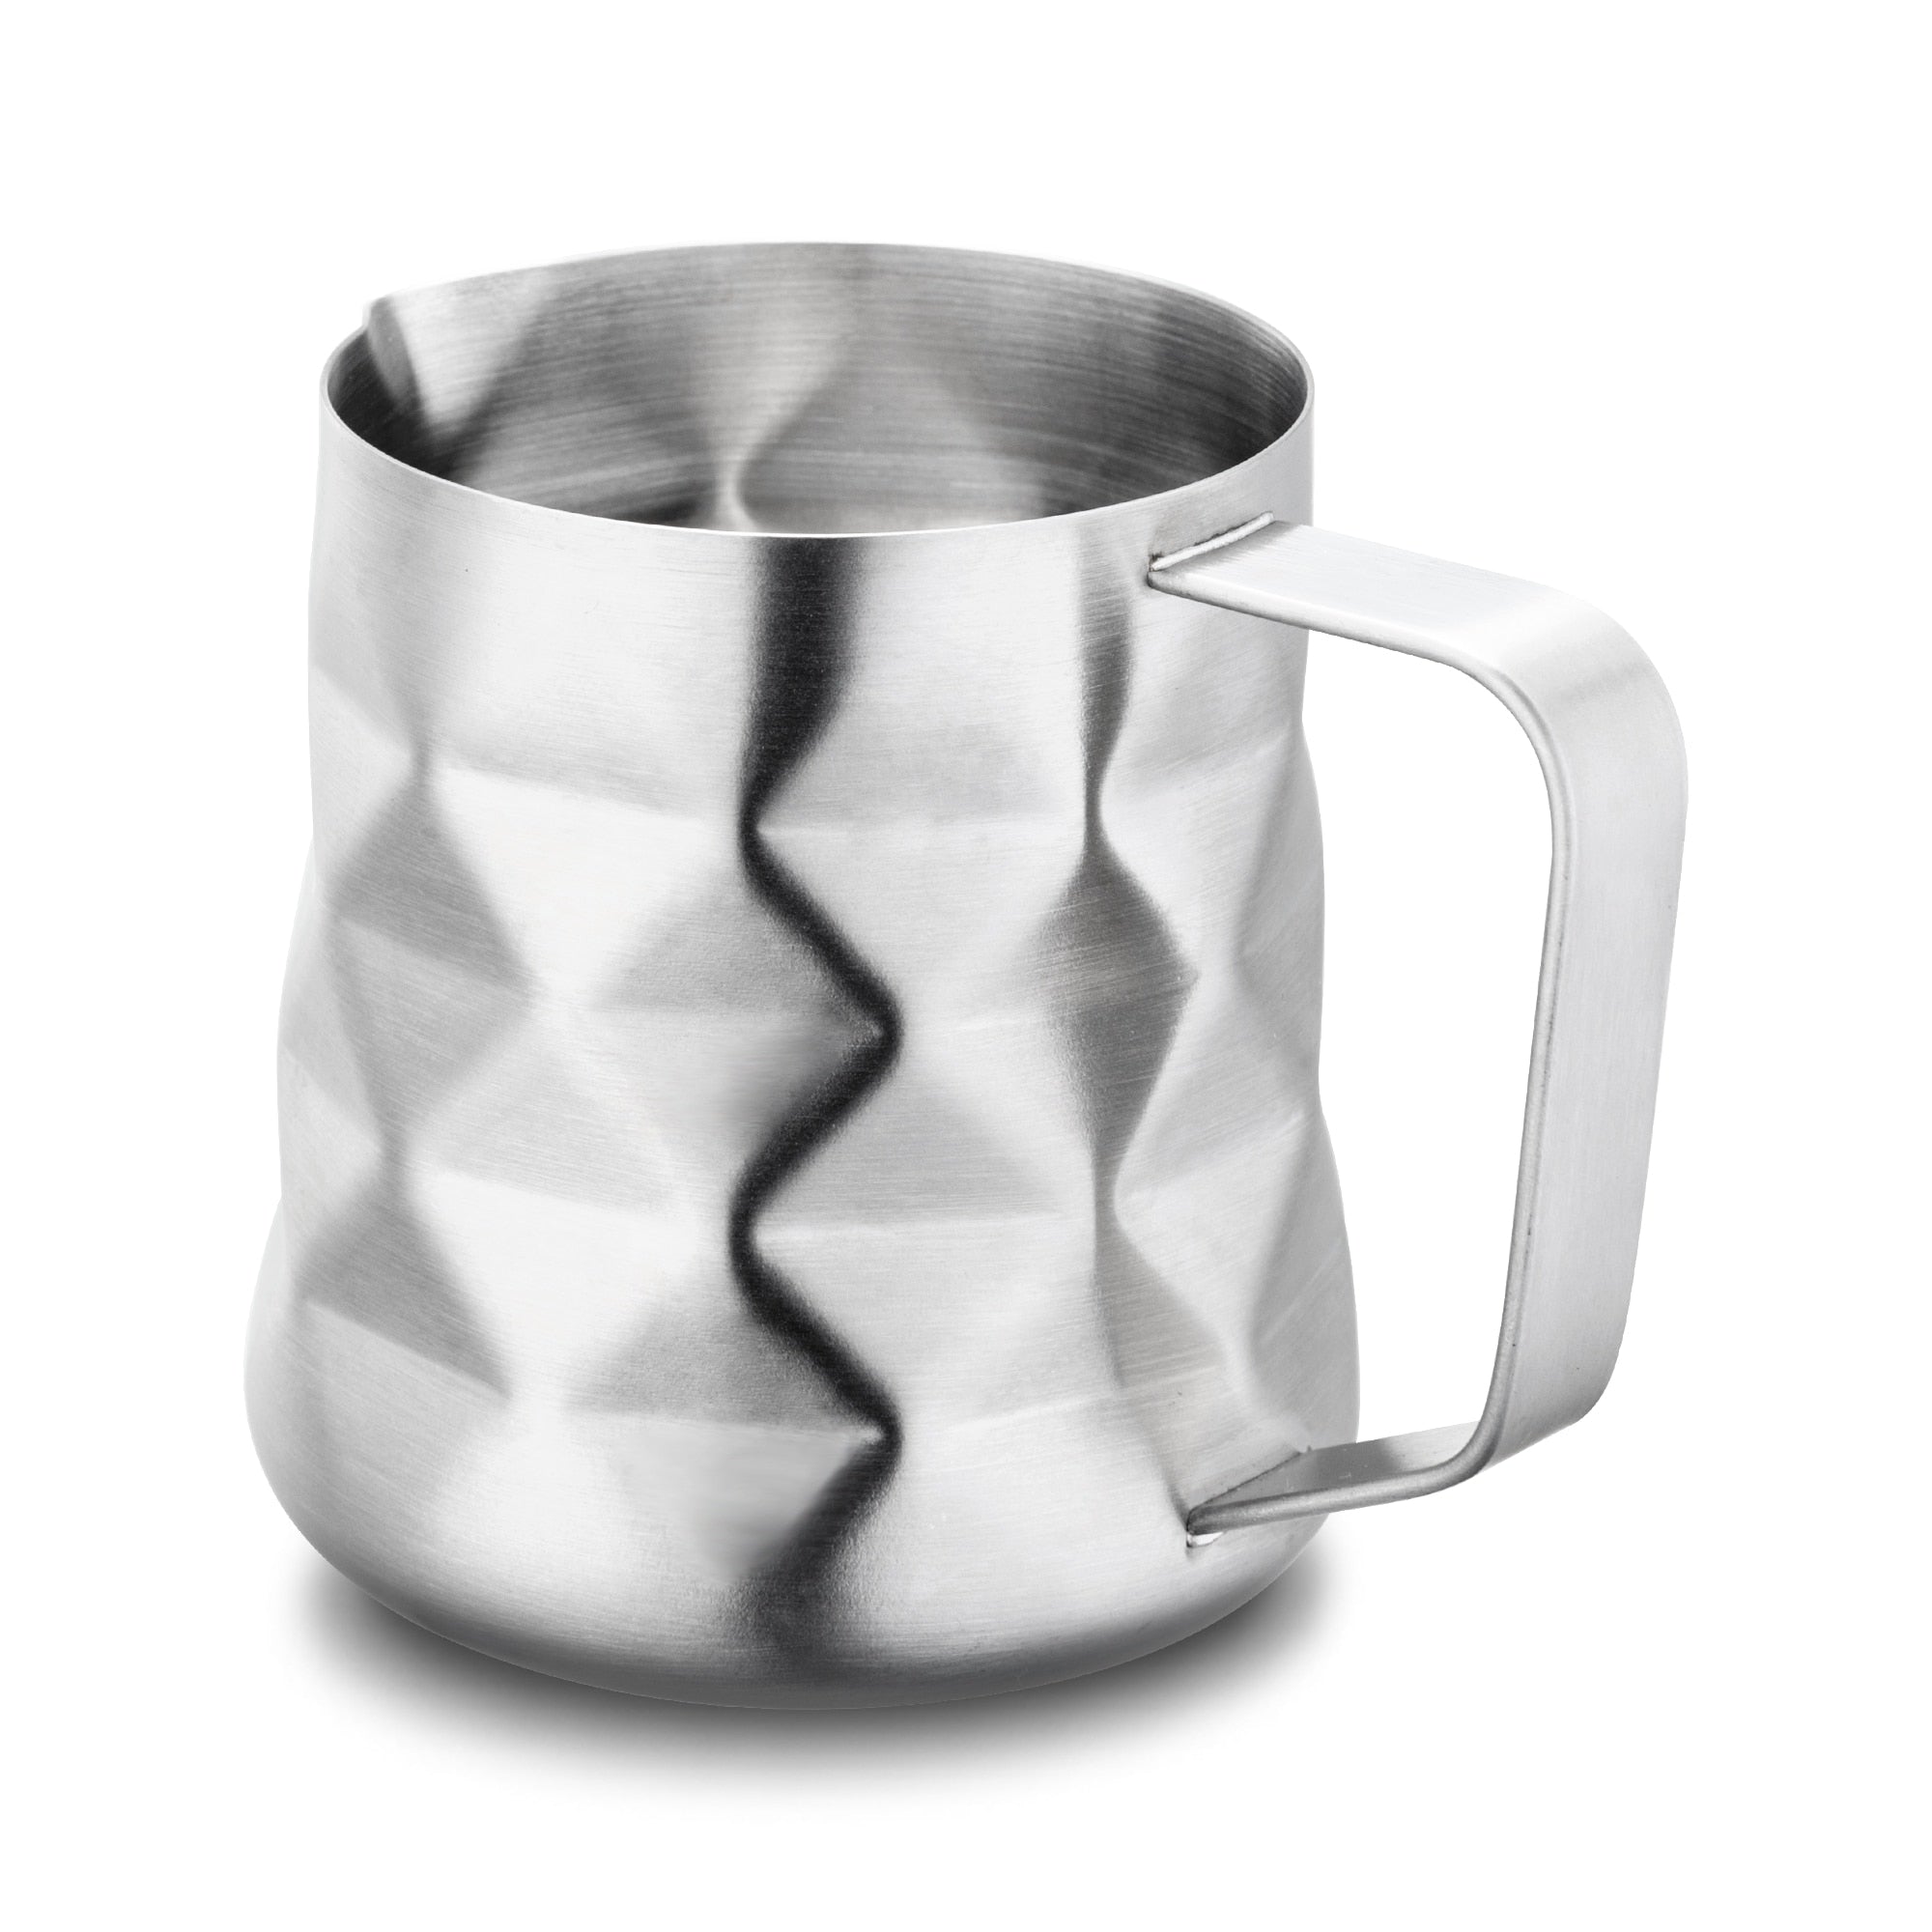 Stainless Steel Prismatic Designed Milk Frothing Pitcher Milk Jug Espresso Coffee Barista Craft Latte Cappuccino Cream Cup Maker